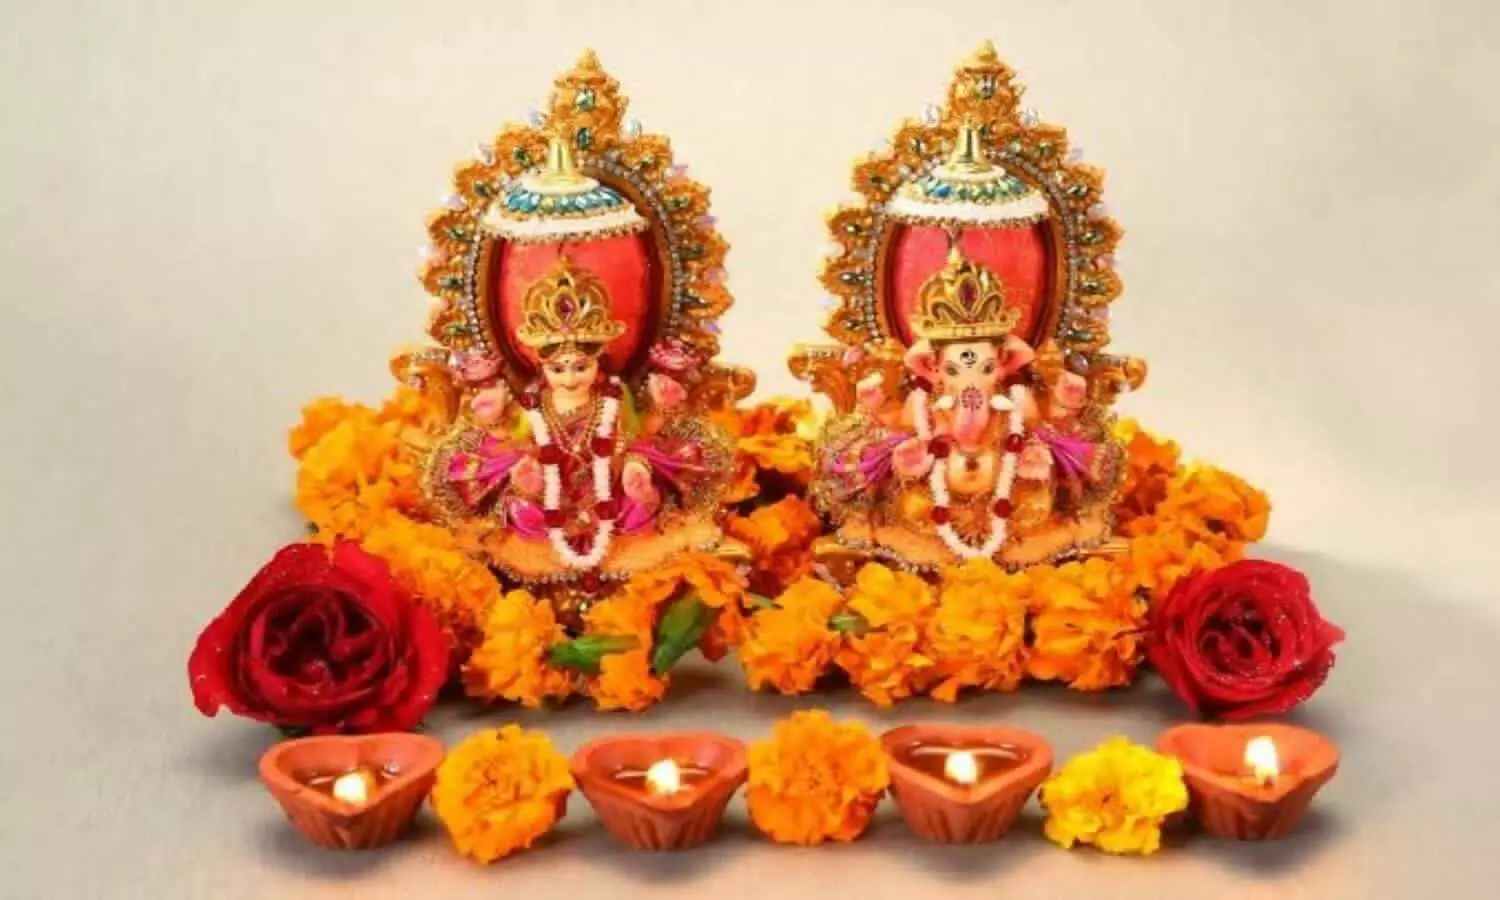 Why Goddess Lakshmi Lord Ganesha worshiped together